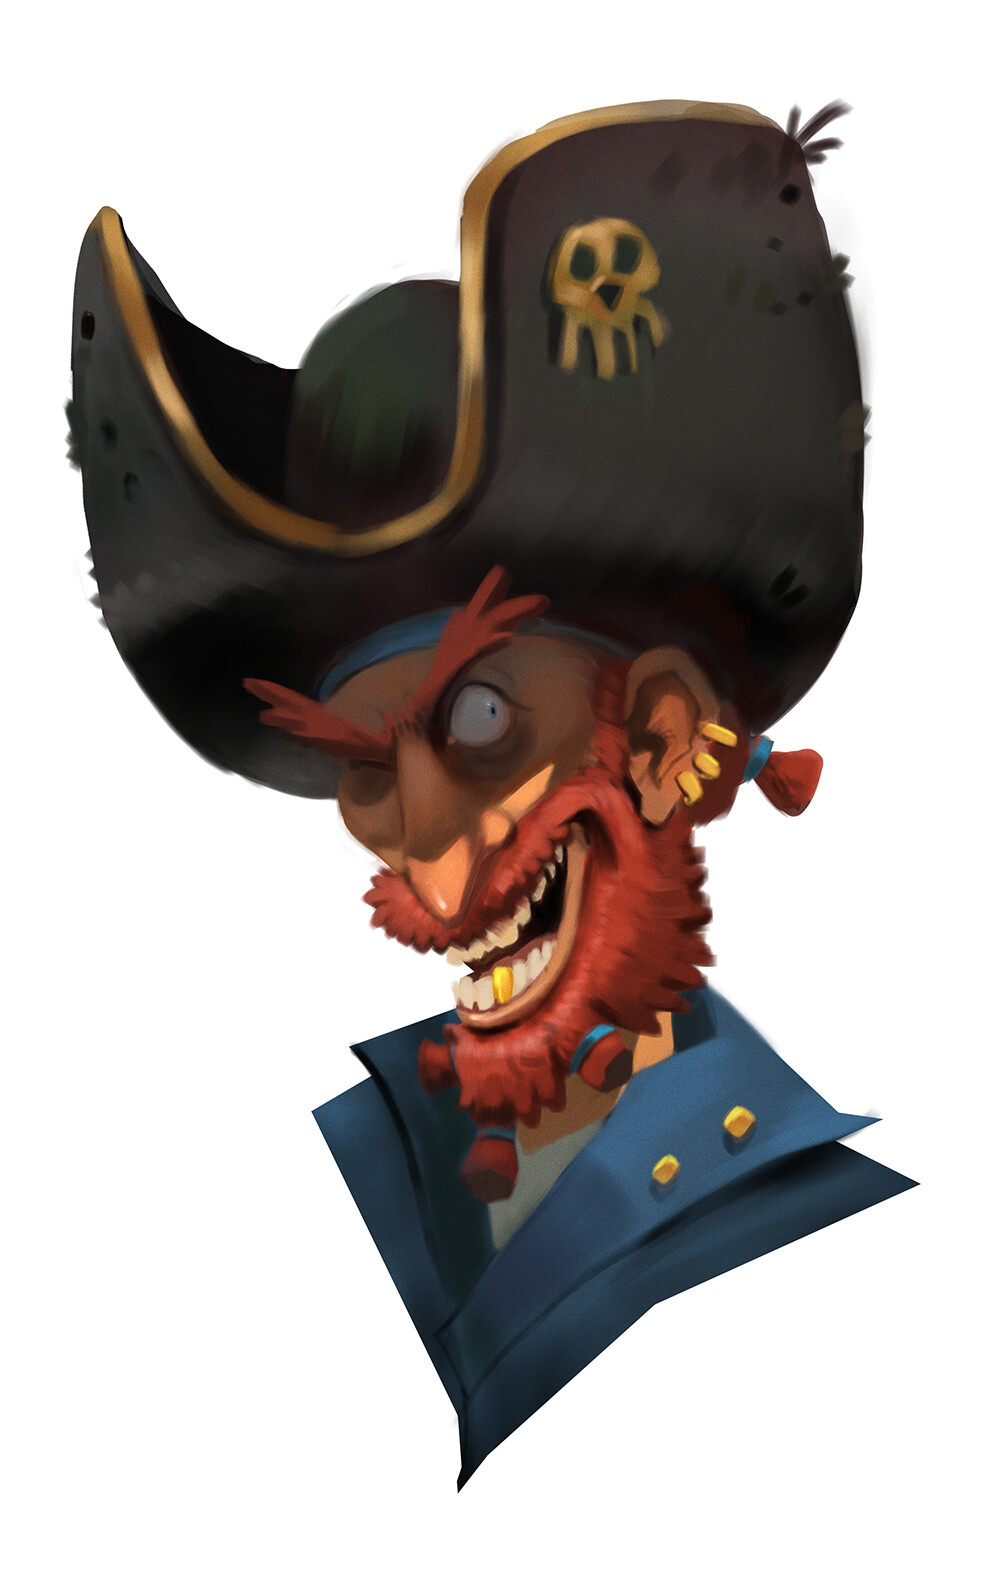 Portrait of a Pirate